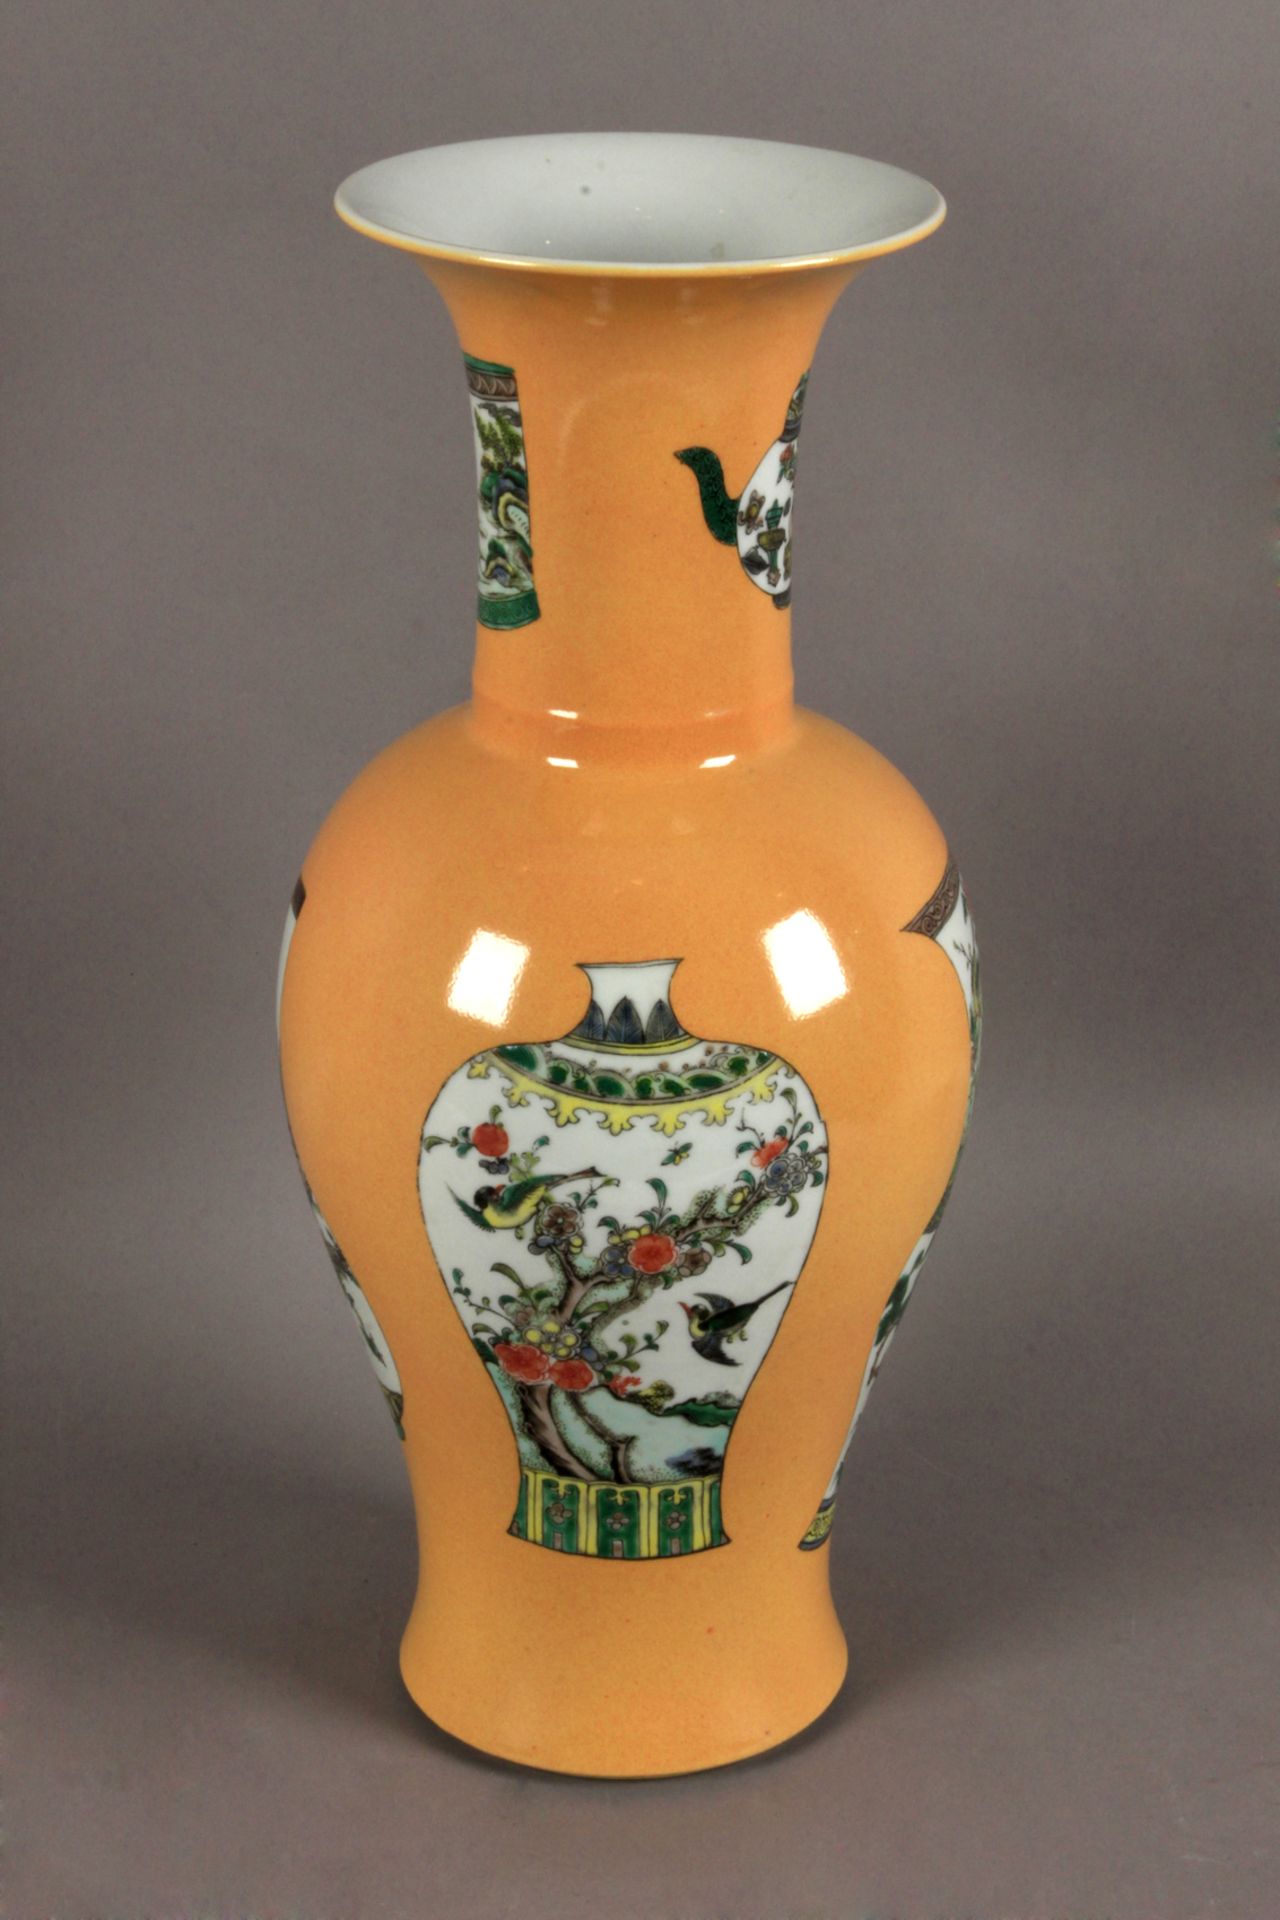 A 20th century Chinese vase in Kangxi style monochrome yellow glazed porcelain